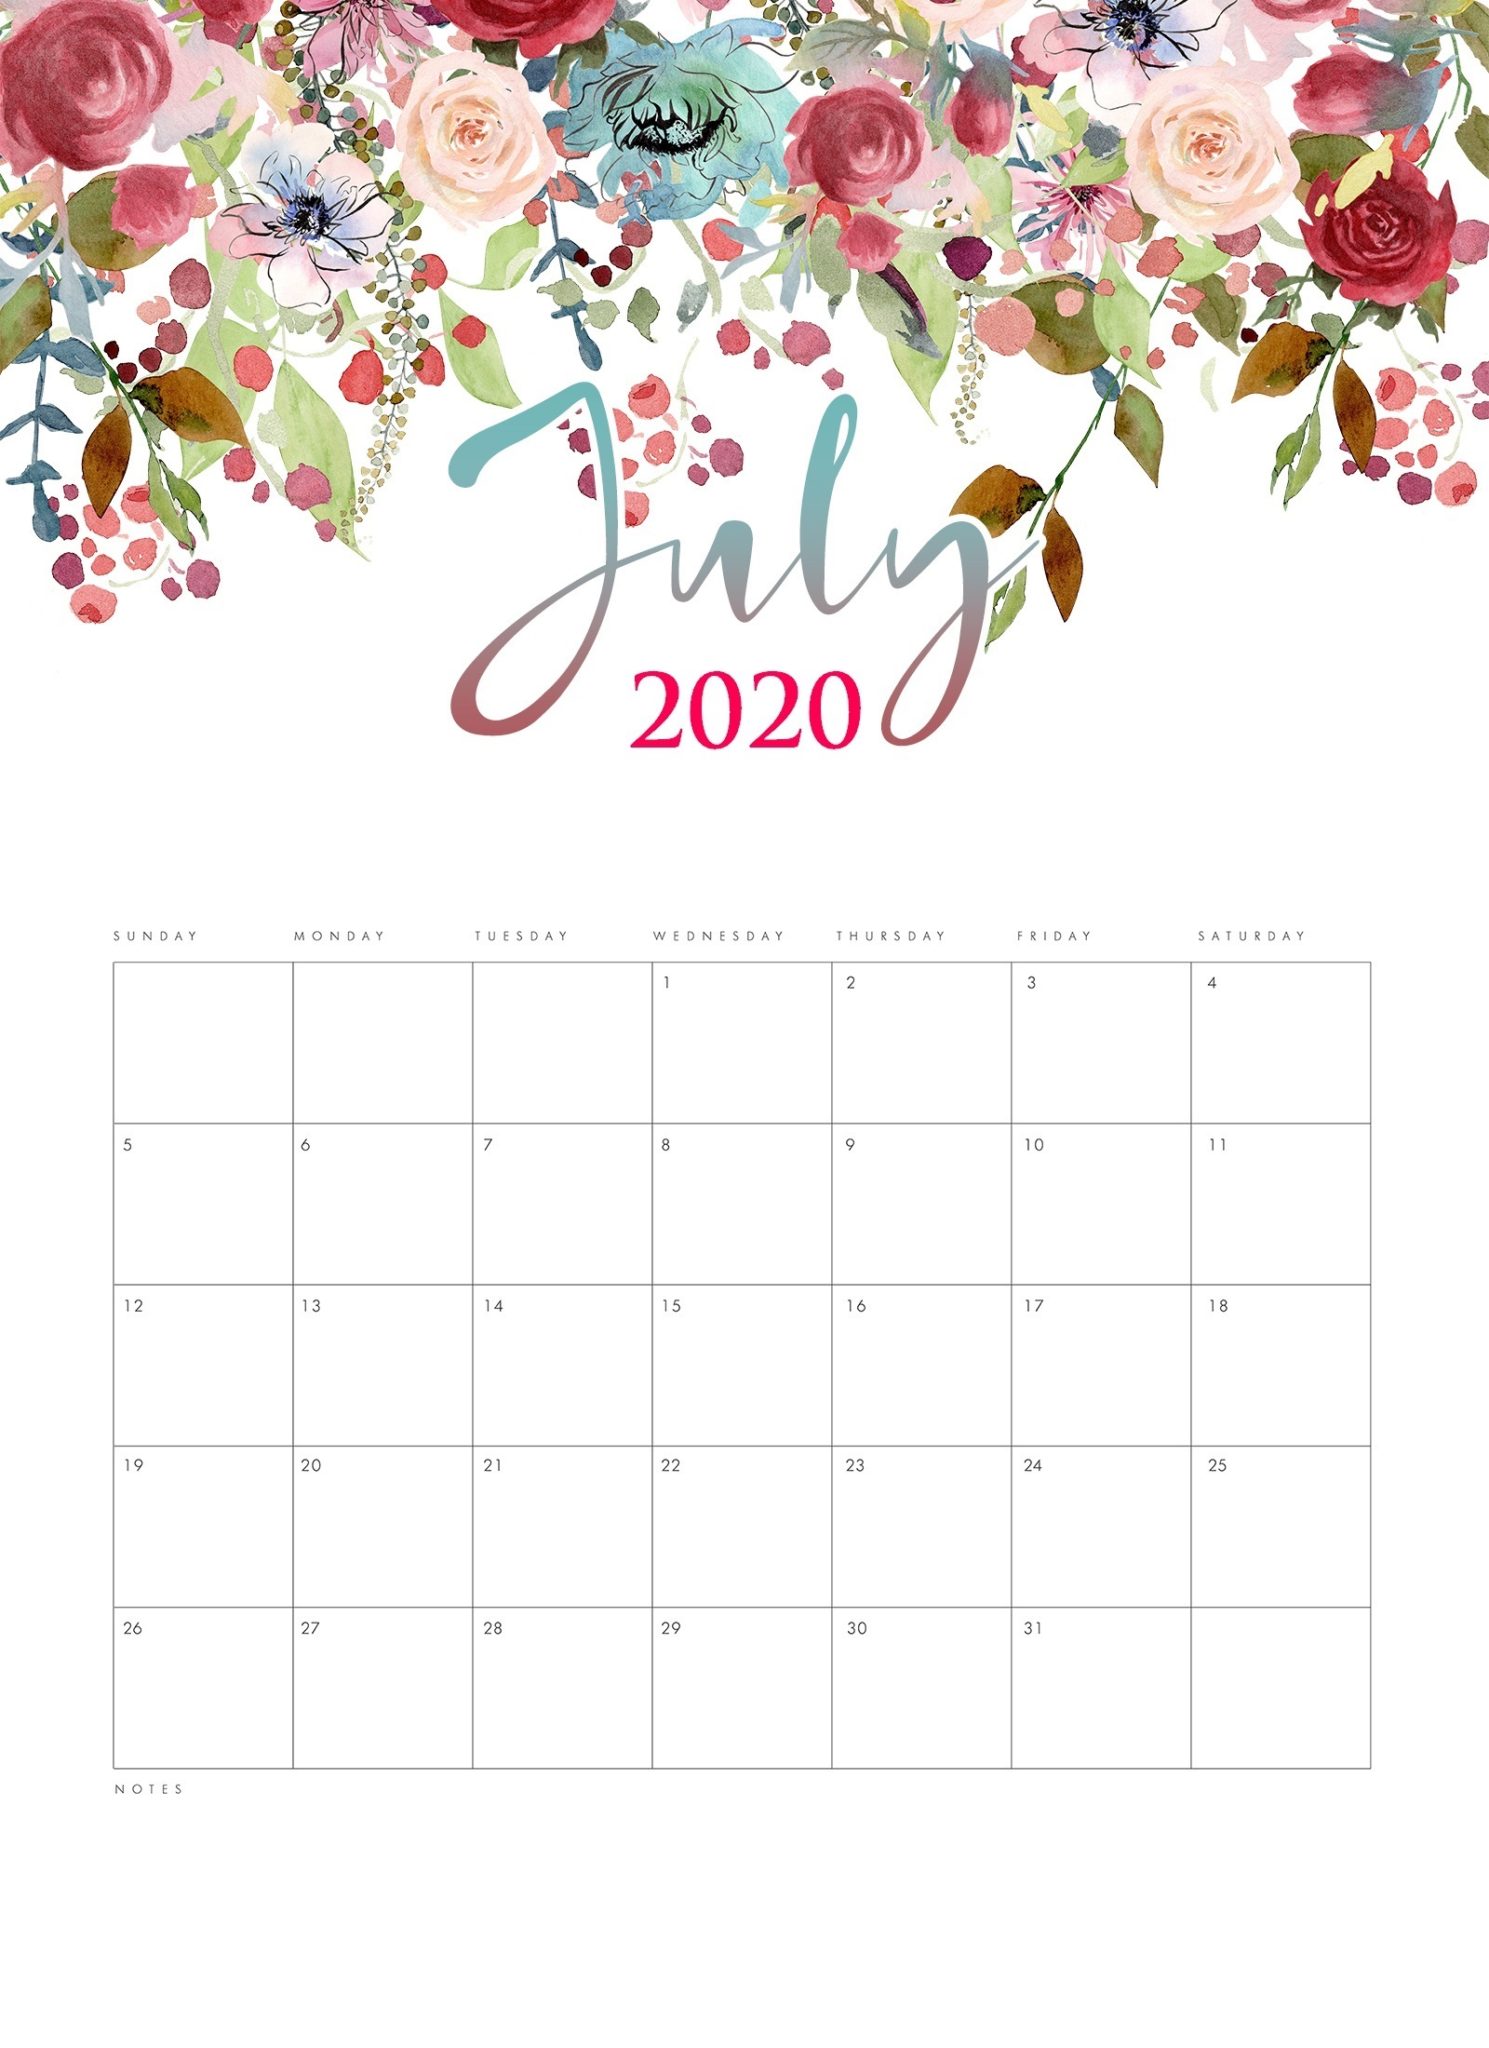 Print July 2020 Floral Calendar